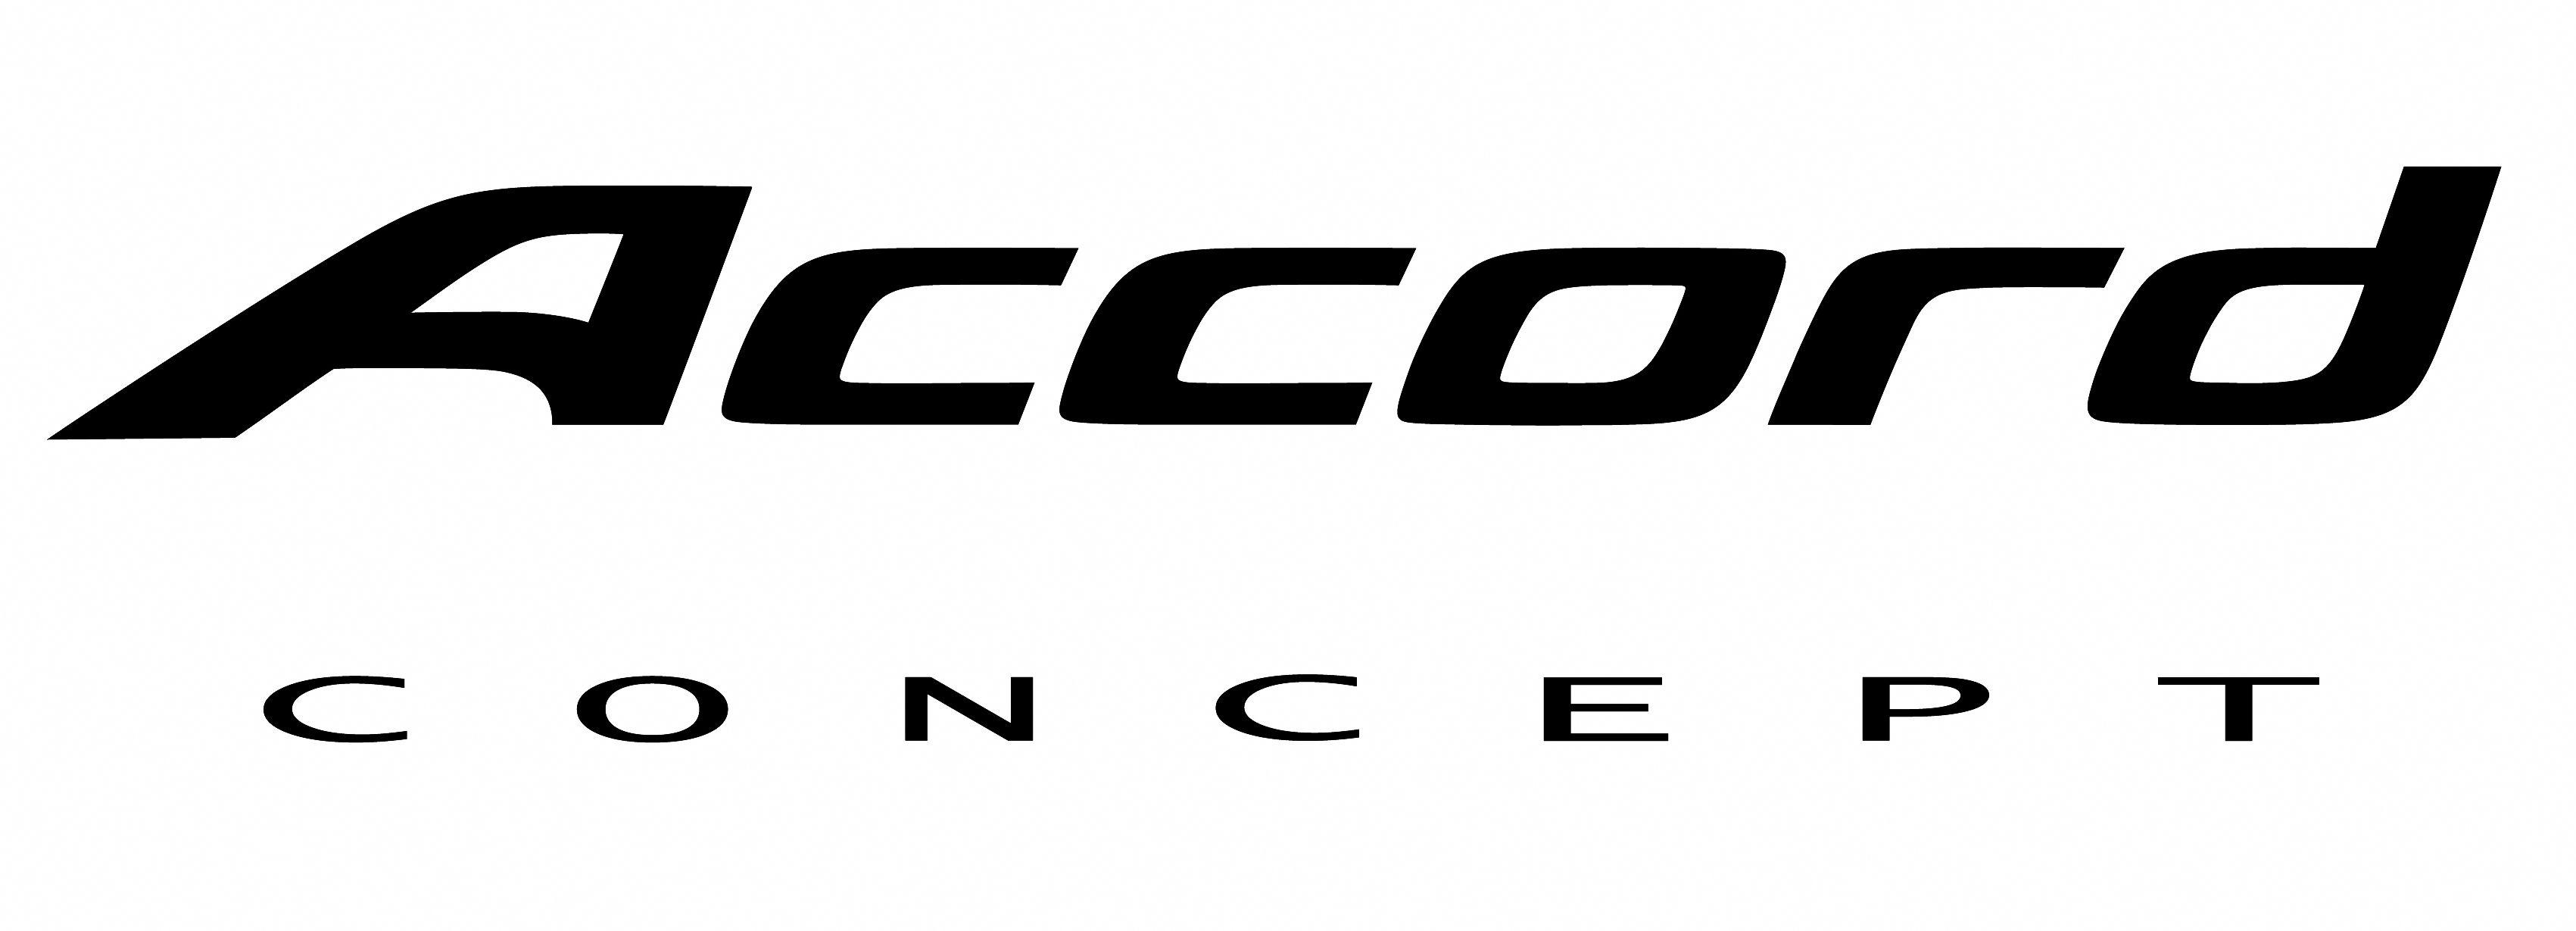 Accord Logo - Honda accord Logos